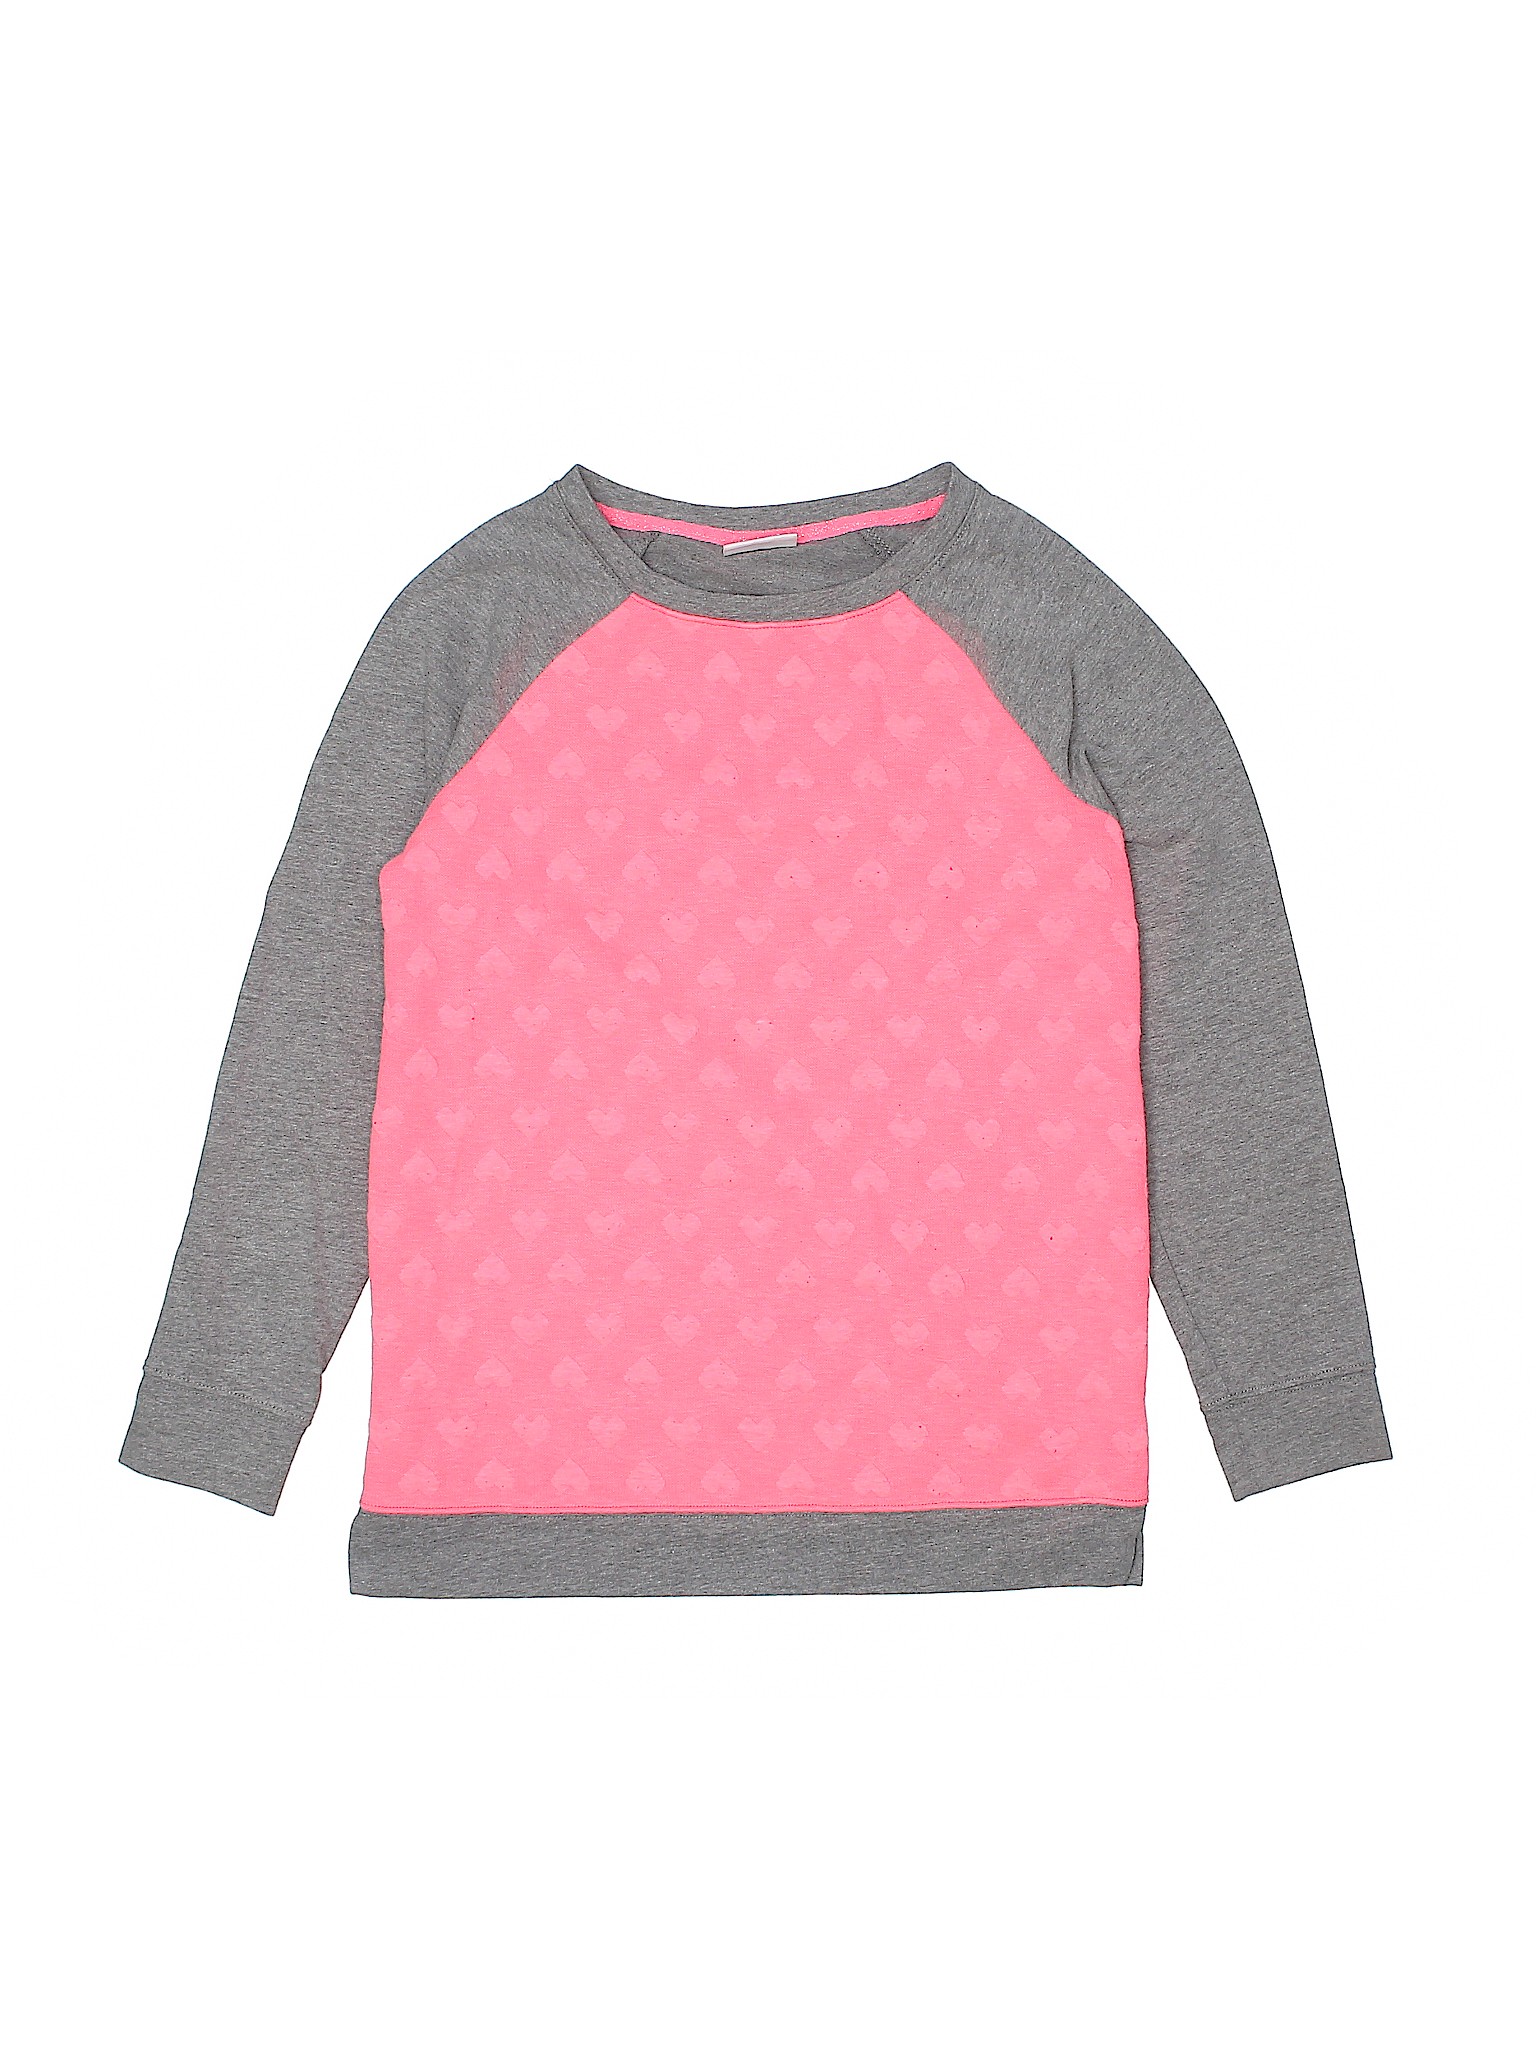 Cat & Jack Girls Pink Pullover Sweater 10 | eBay